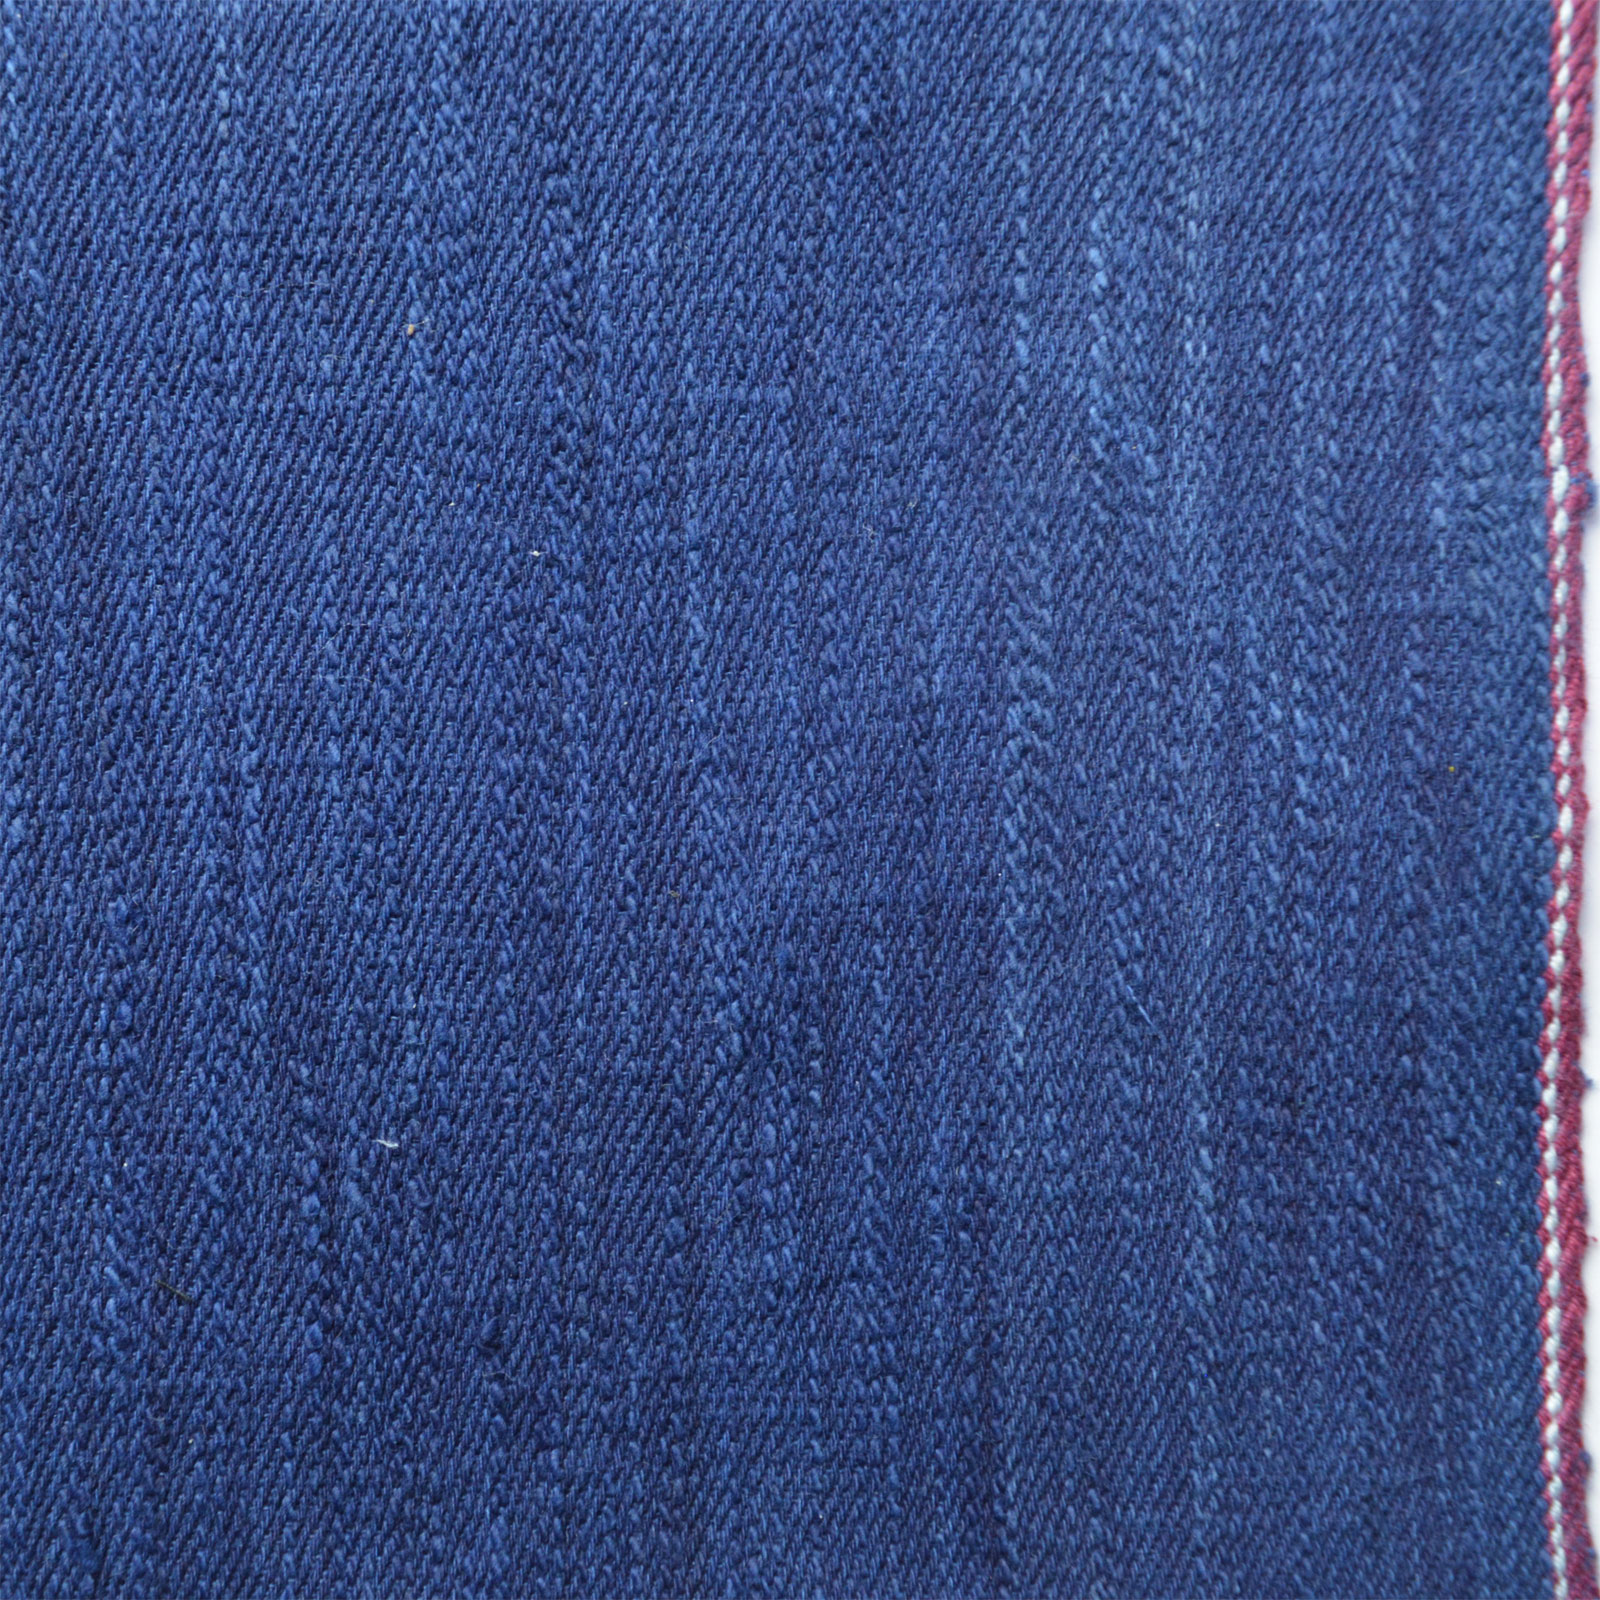 Silver & Black Denim Fabric For Jeans at Best Price in Sanand | Arvind  Mills Ltd.